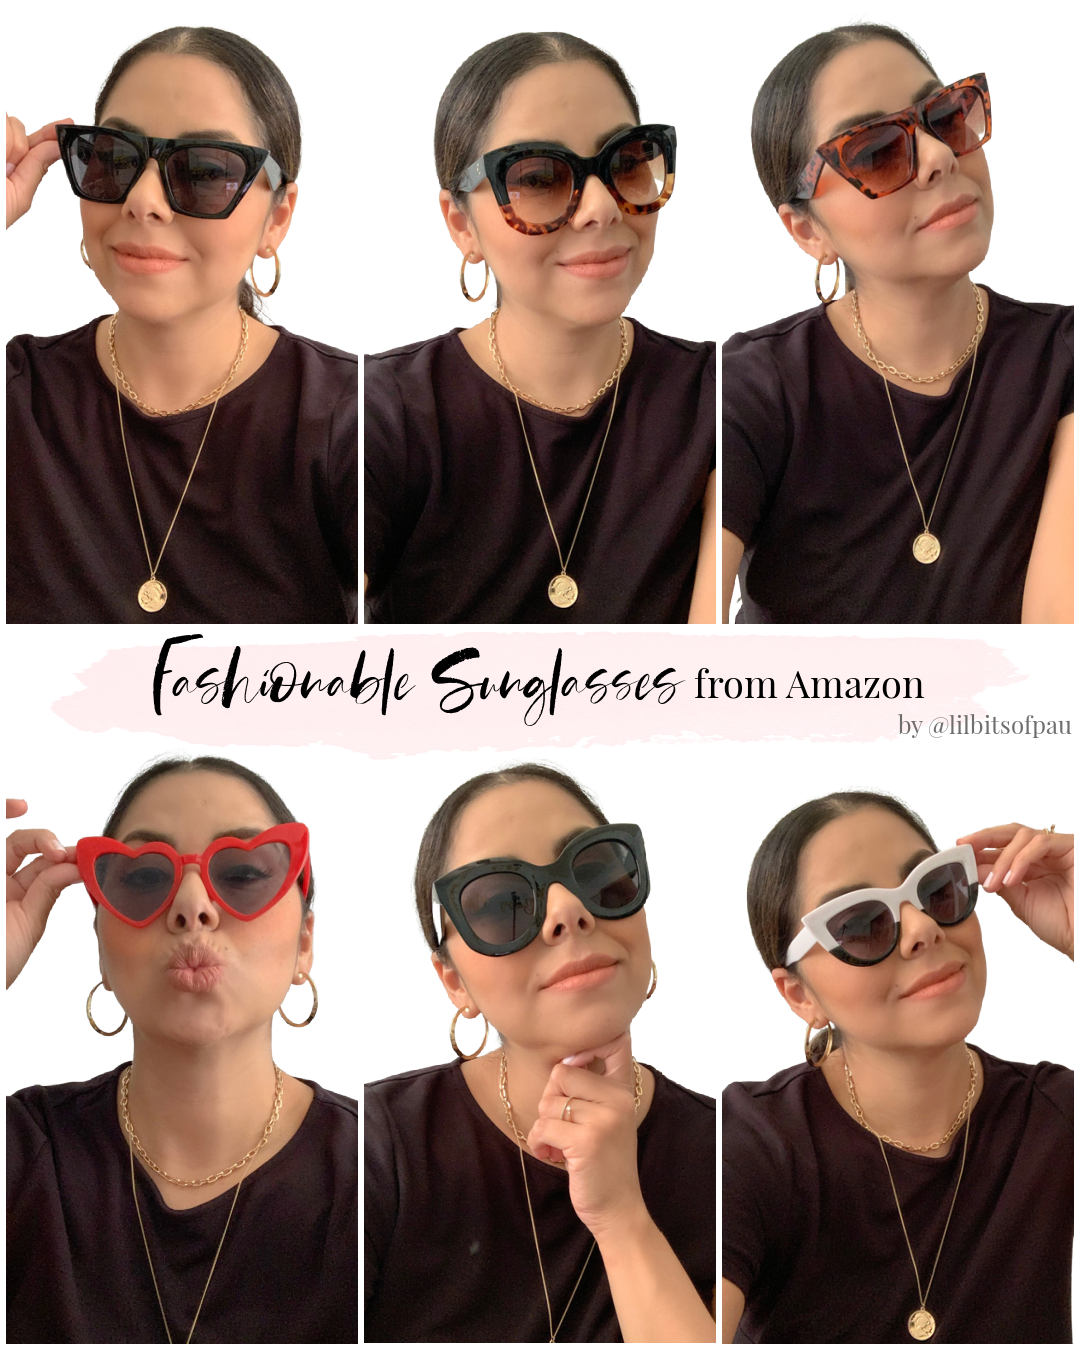 Fashionable Sunglasses from Amazon, 6 pairs of Amazon sunglasses